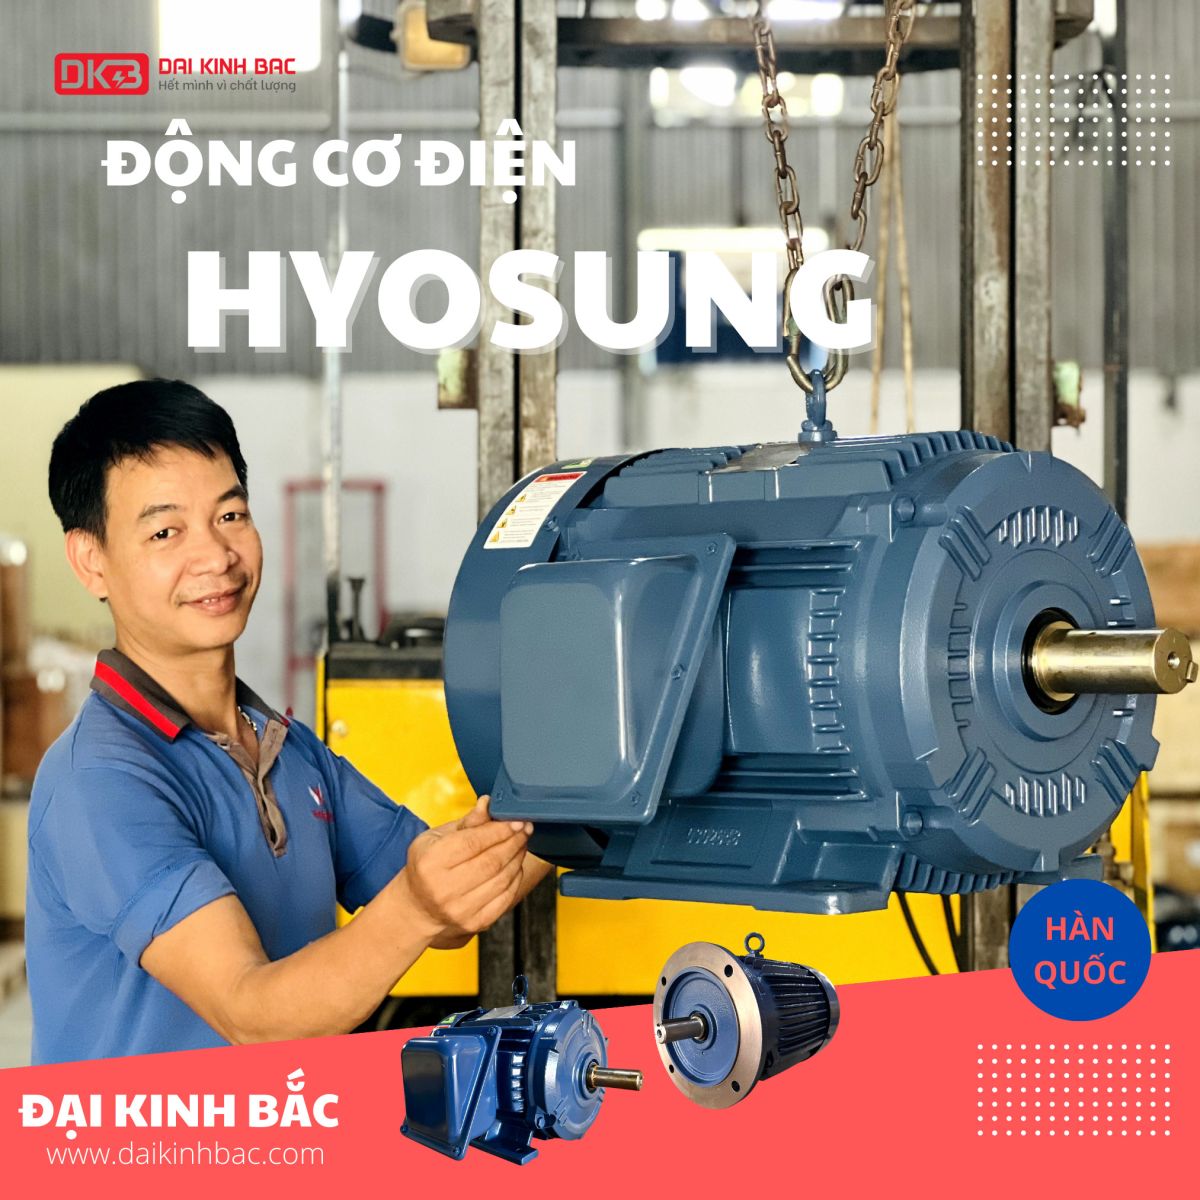 motor-dien-3-pha-2-cuc-hyosung-han-quoc-